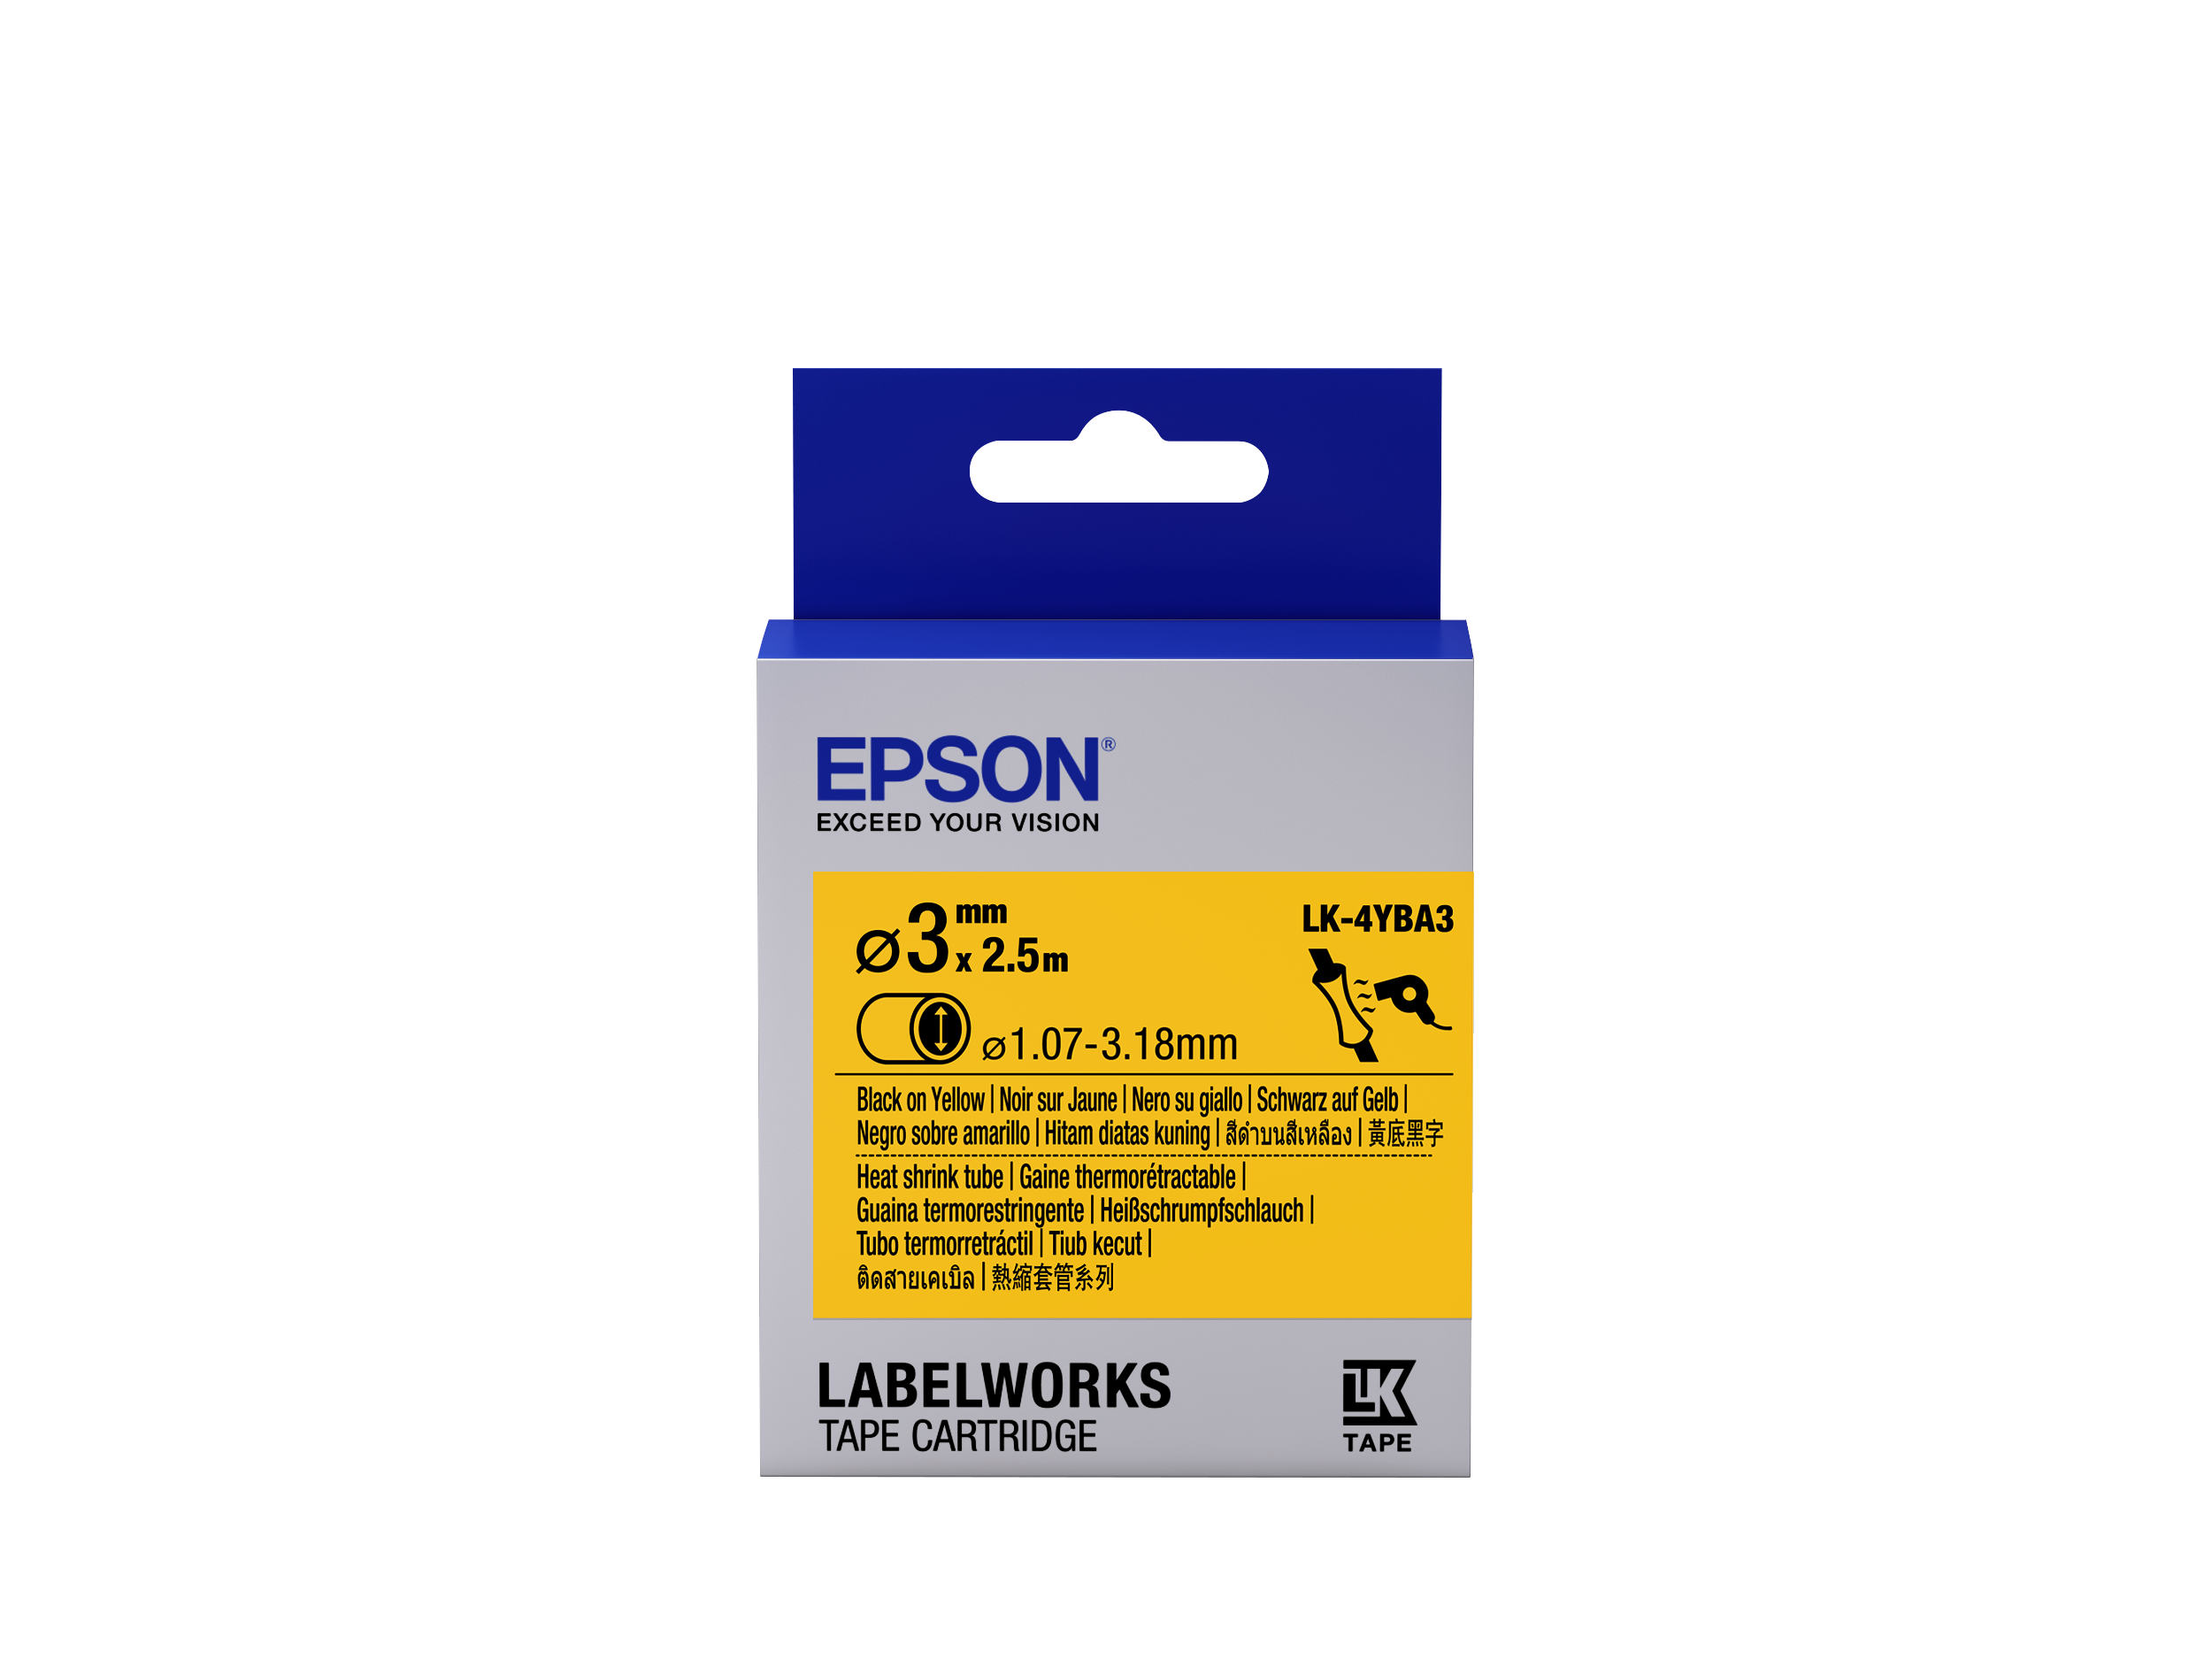 Epson Label Cartridge Heat Shrink Tube (HST) LK-4YBA3, zwart/geel D3 mm (2,5 m)